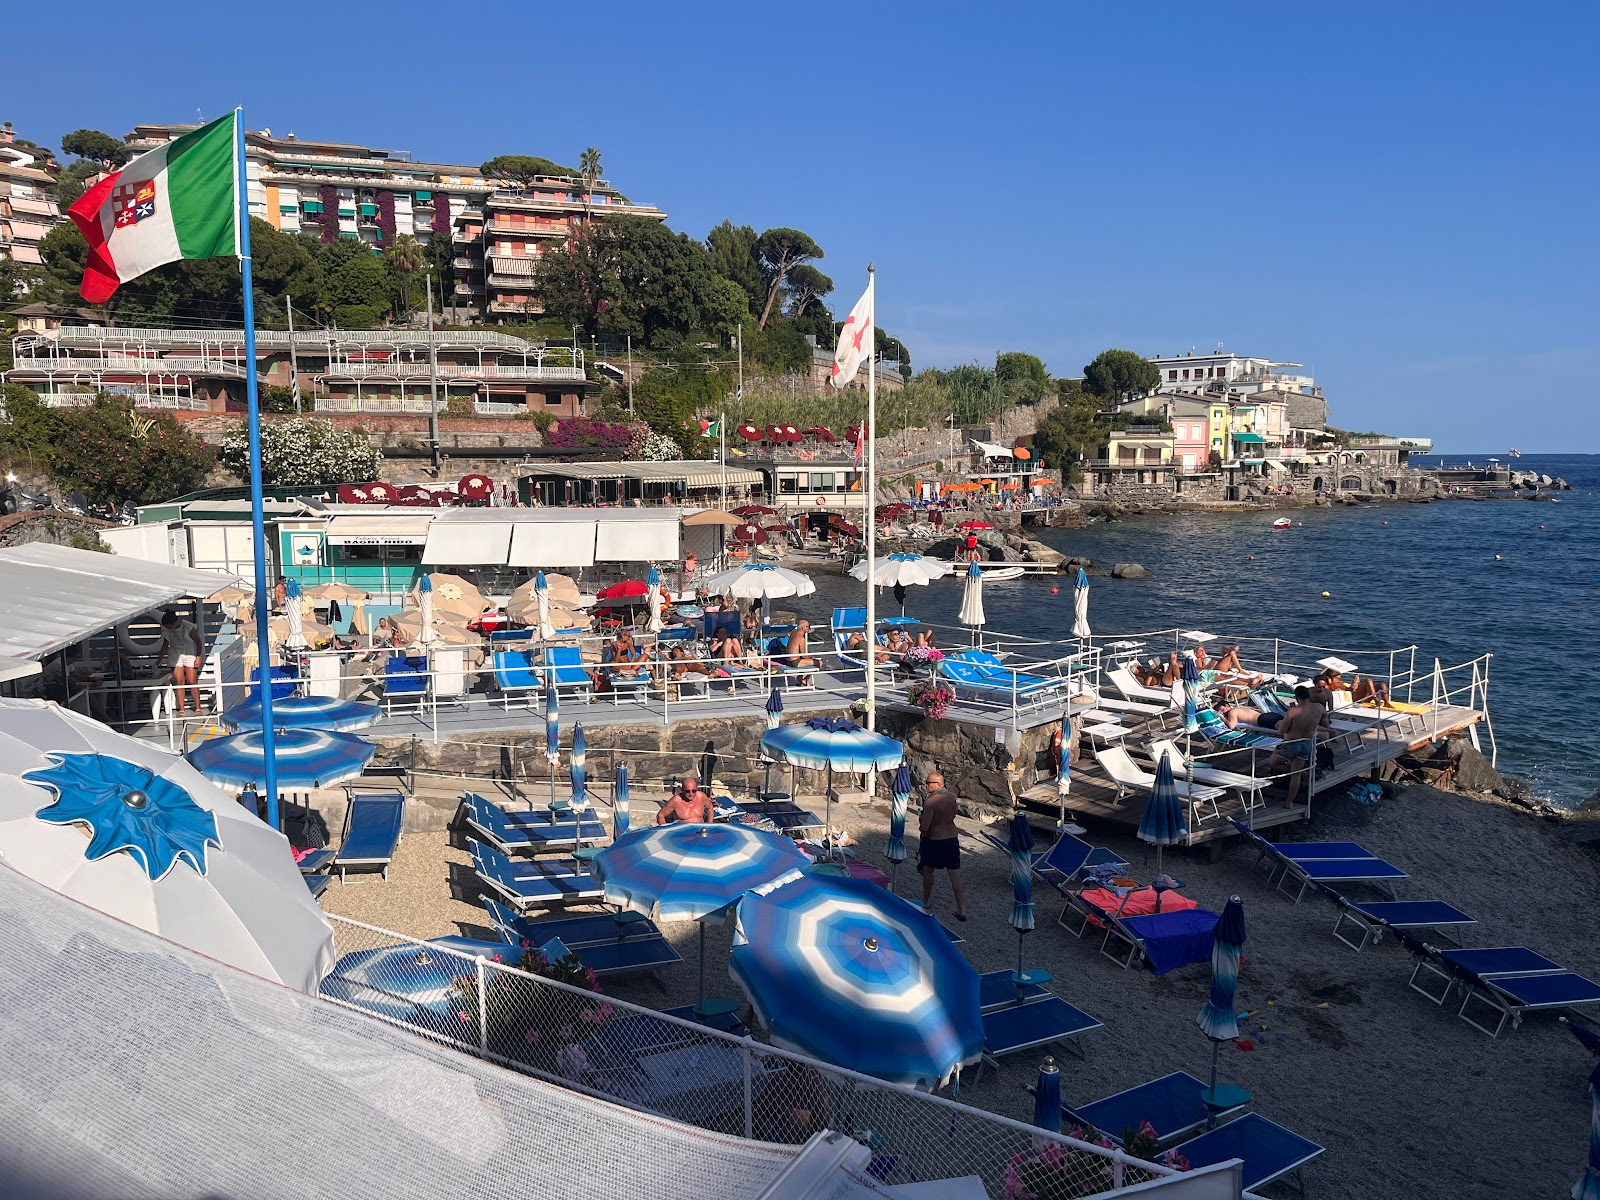 Foto de Bagni Baia Dei Sogni - Rapallo com alto nível de limpeza